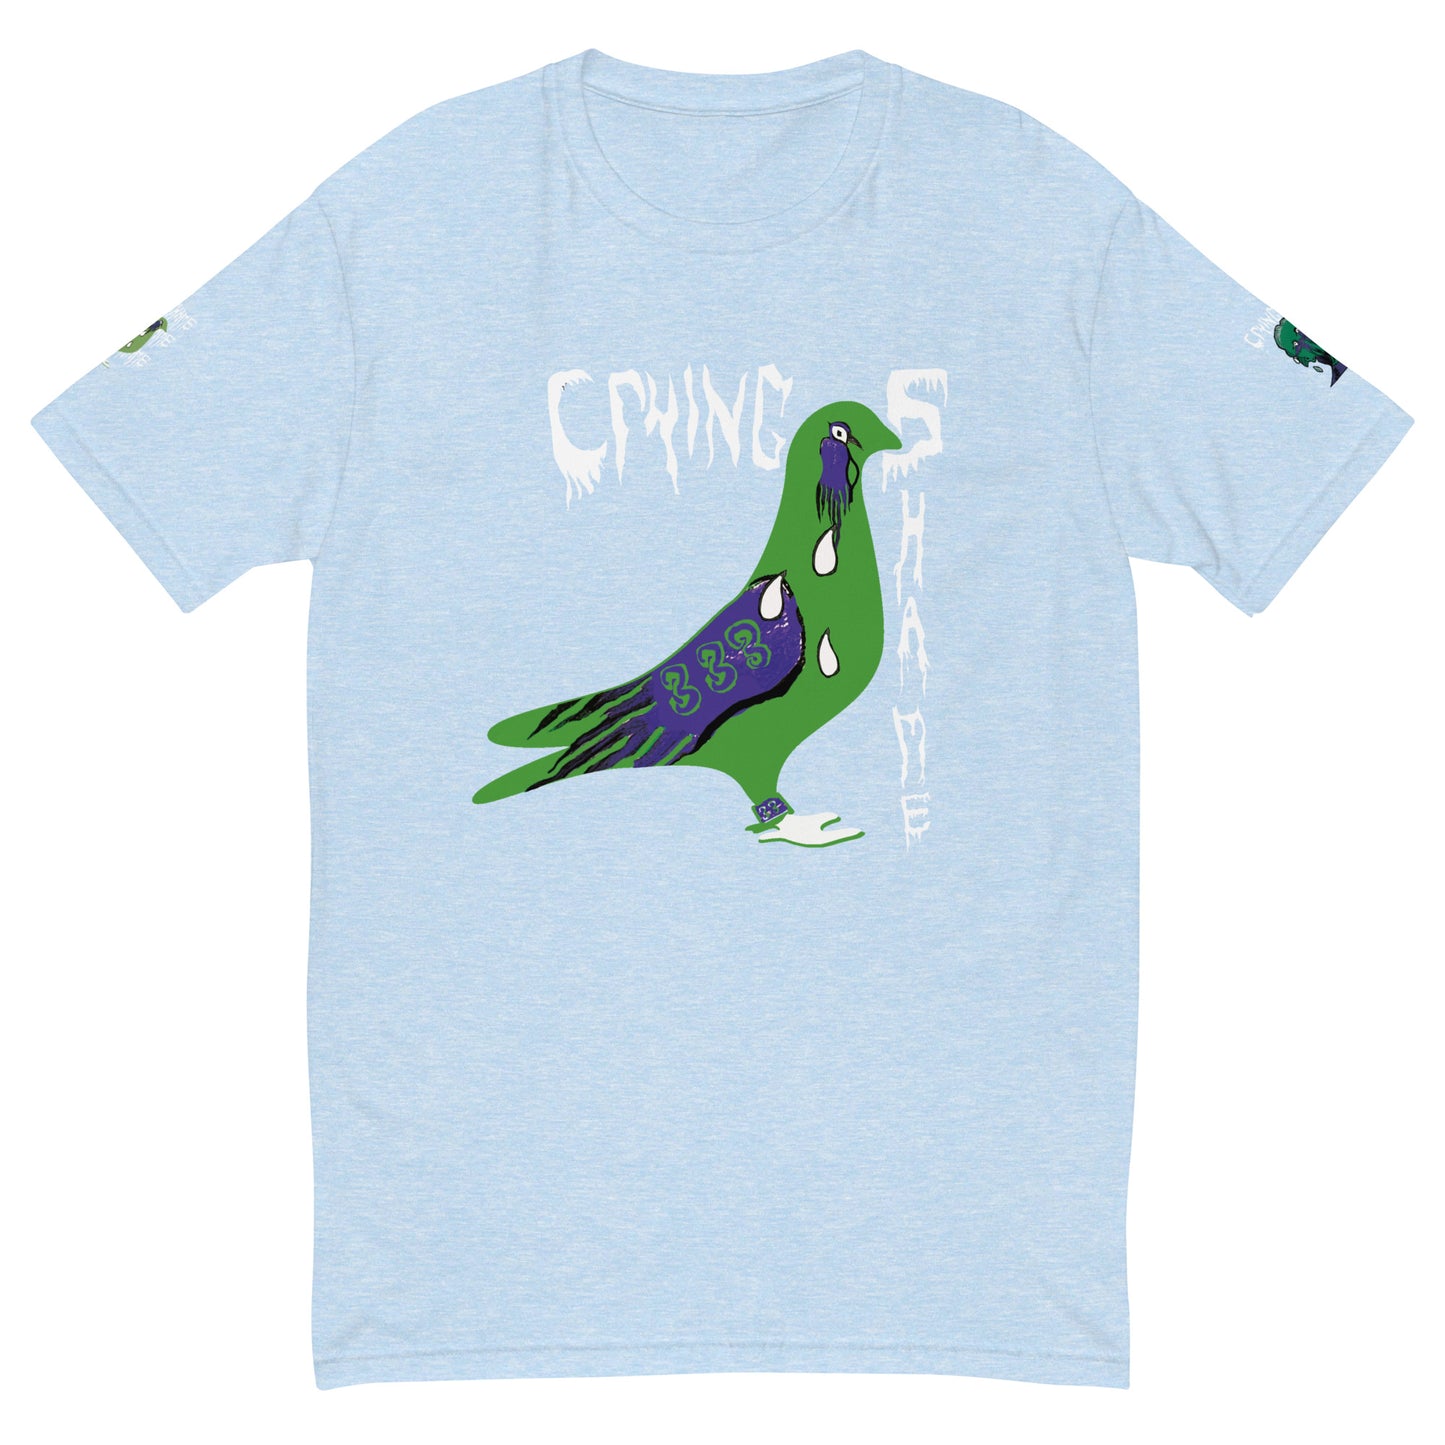 Crying Shame Pidgeon - Short Sleeve T-shirt